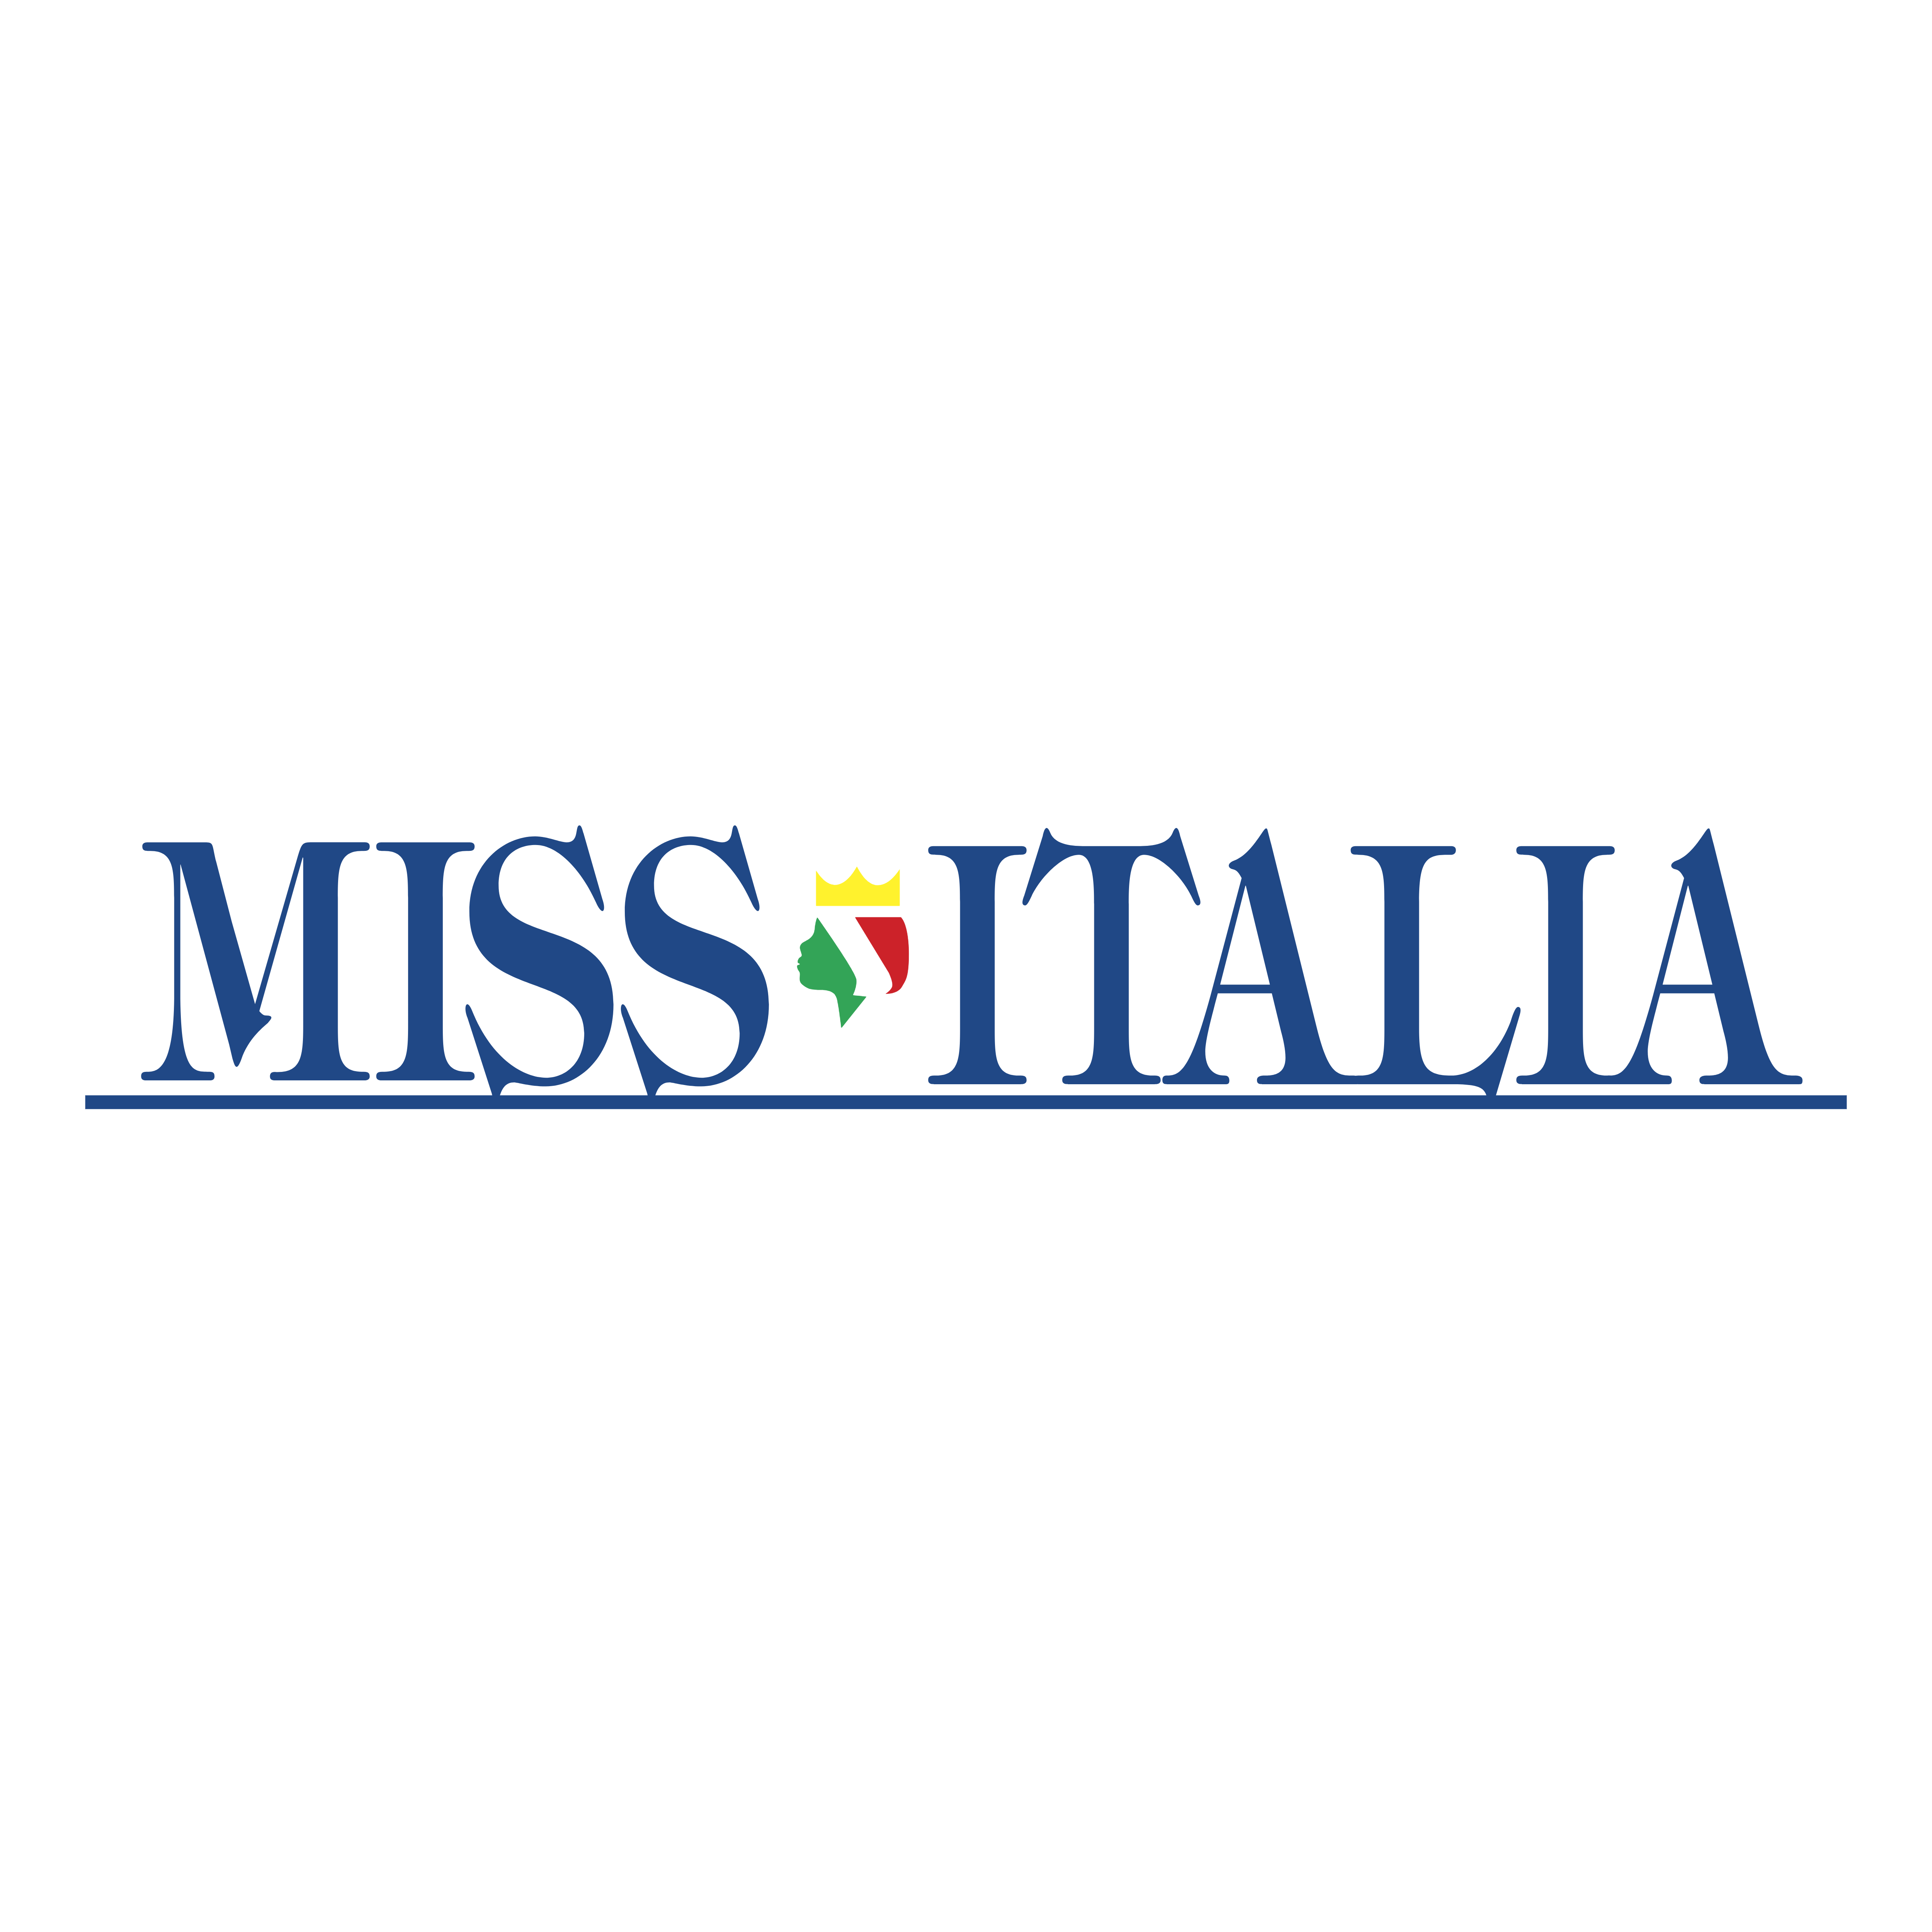 Miss Italia – Logos Download